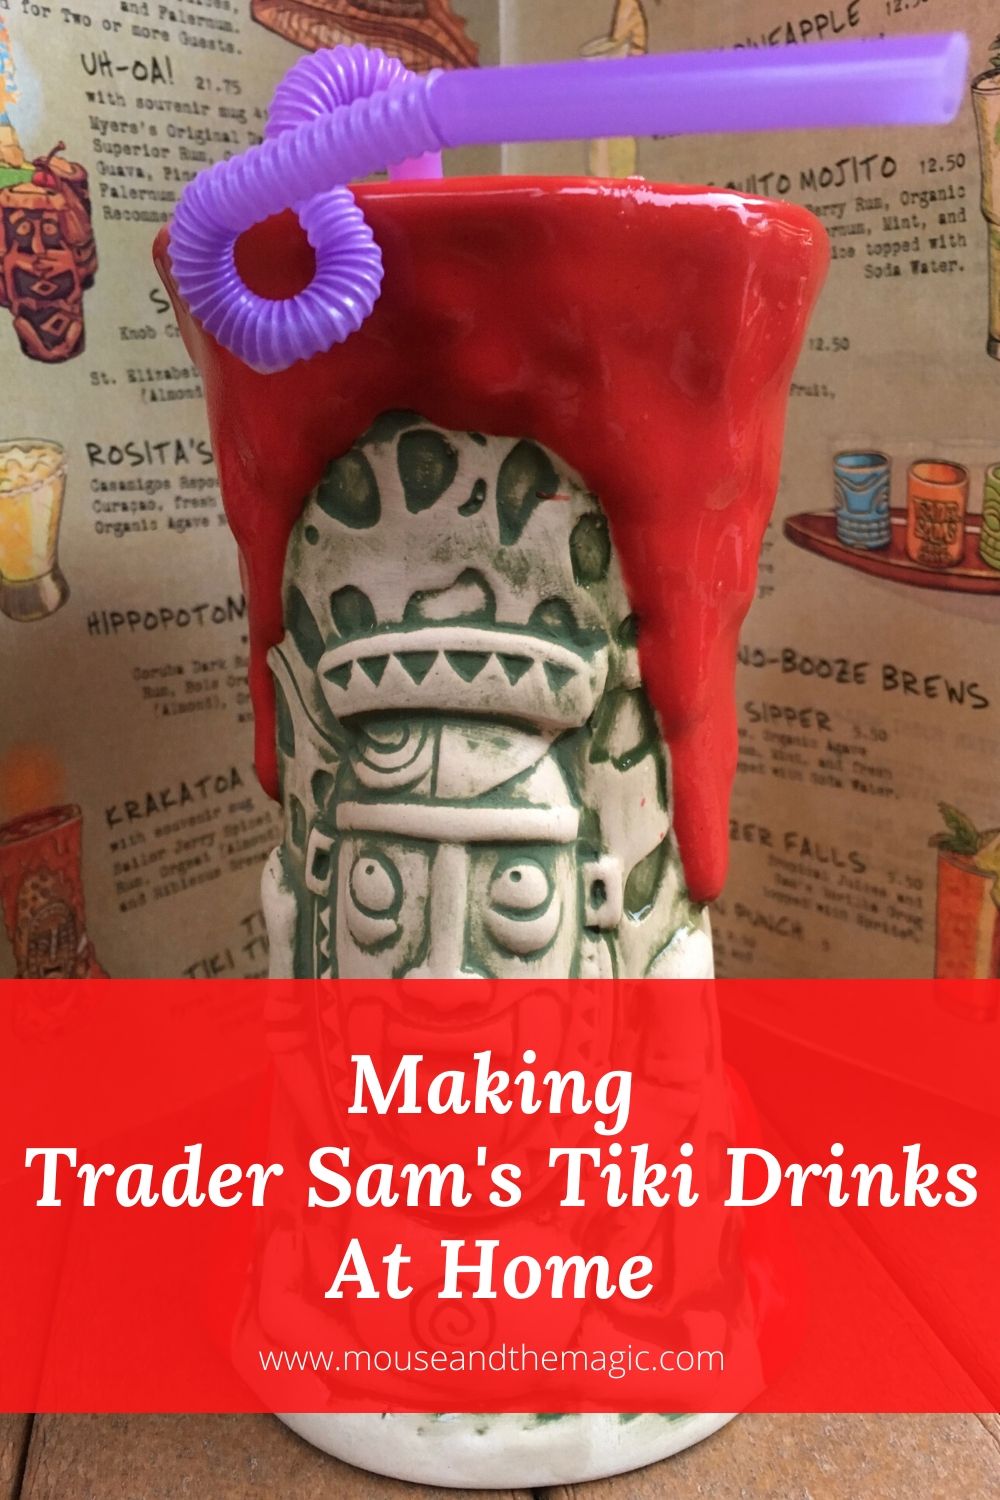 Making Trader Sam's Drinks at Home